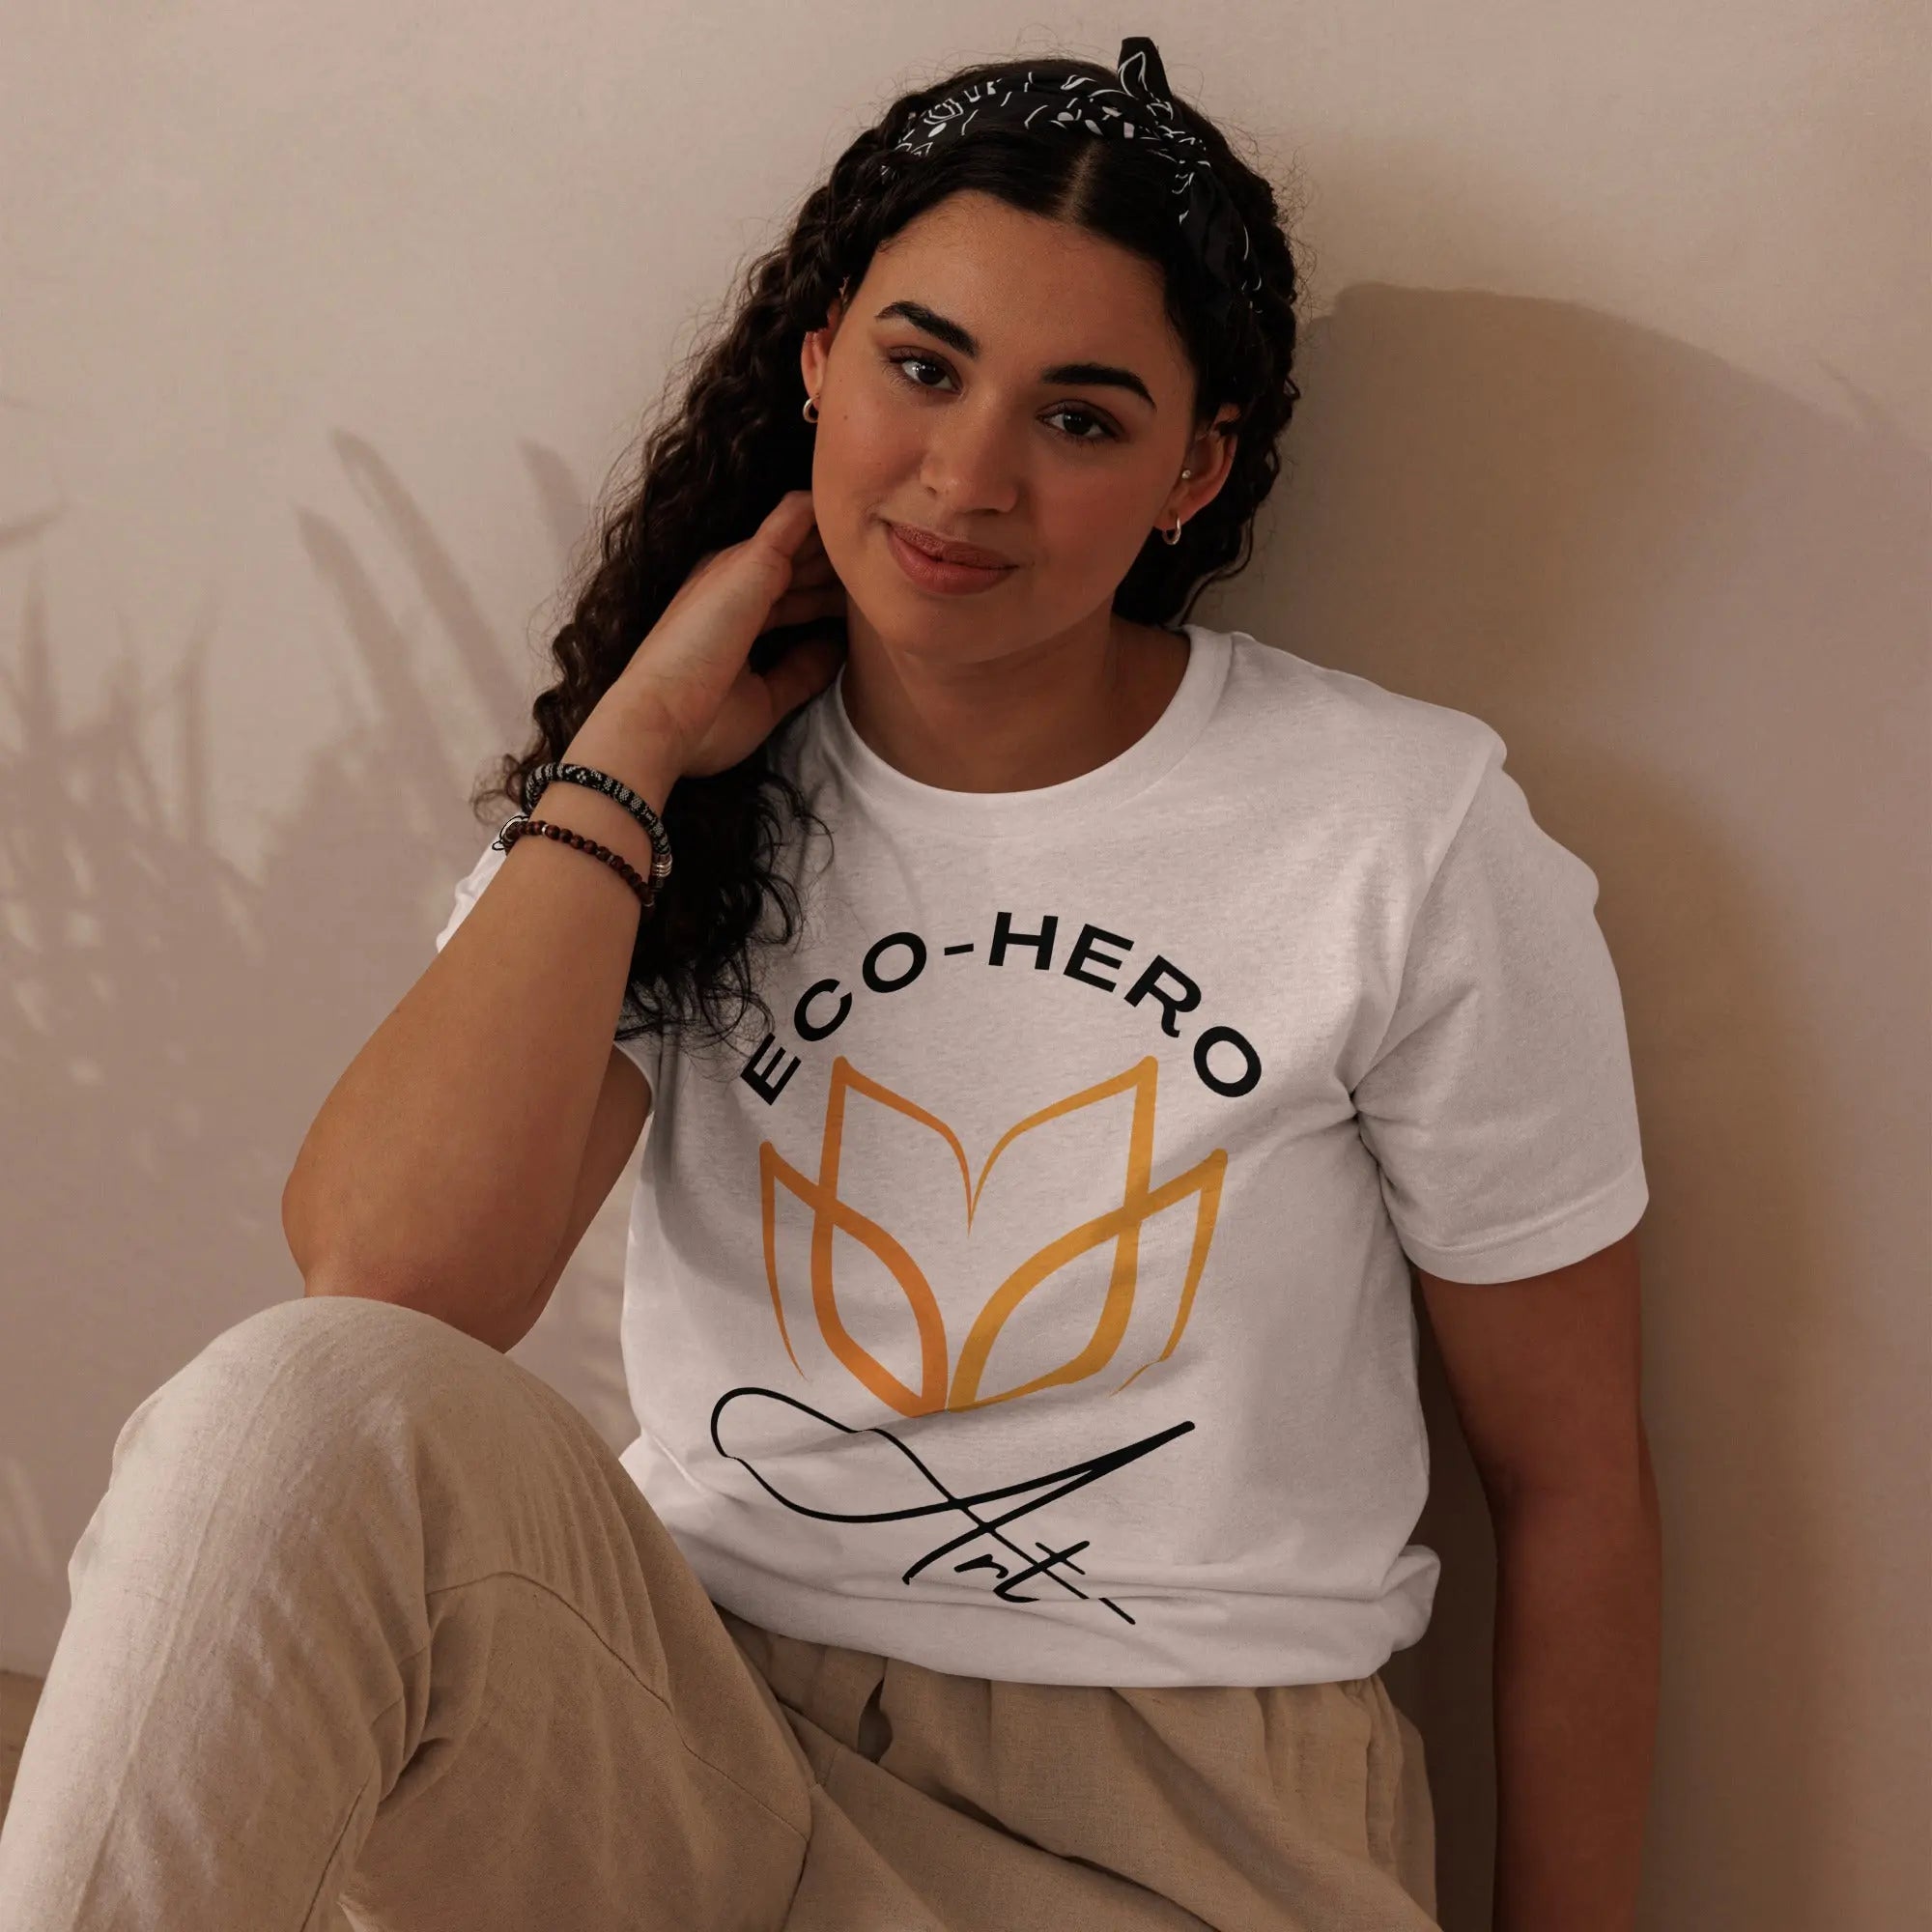 Eco-Hero | Eco t-shirt | ATGF GeorgeKenny Design